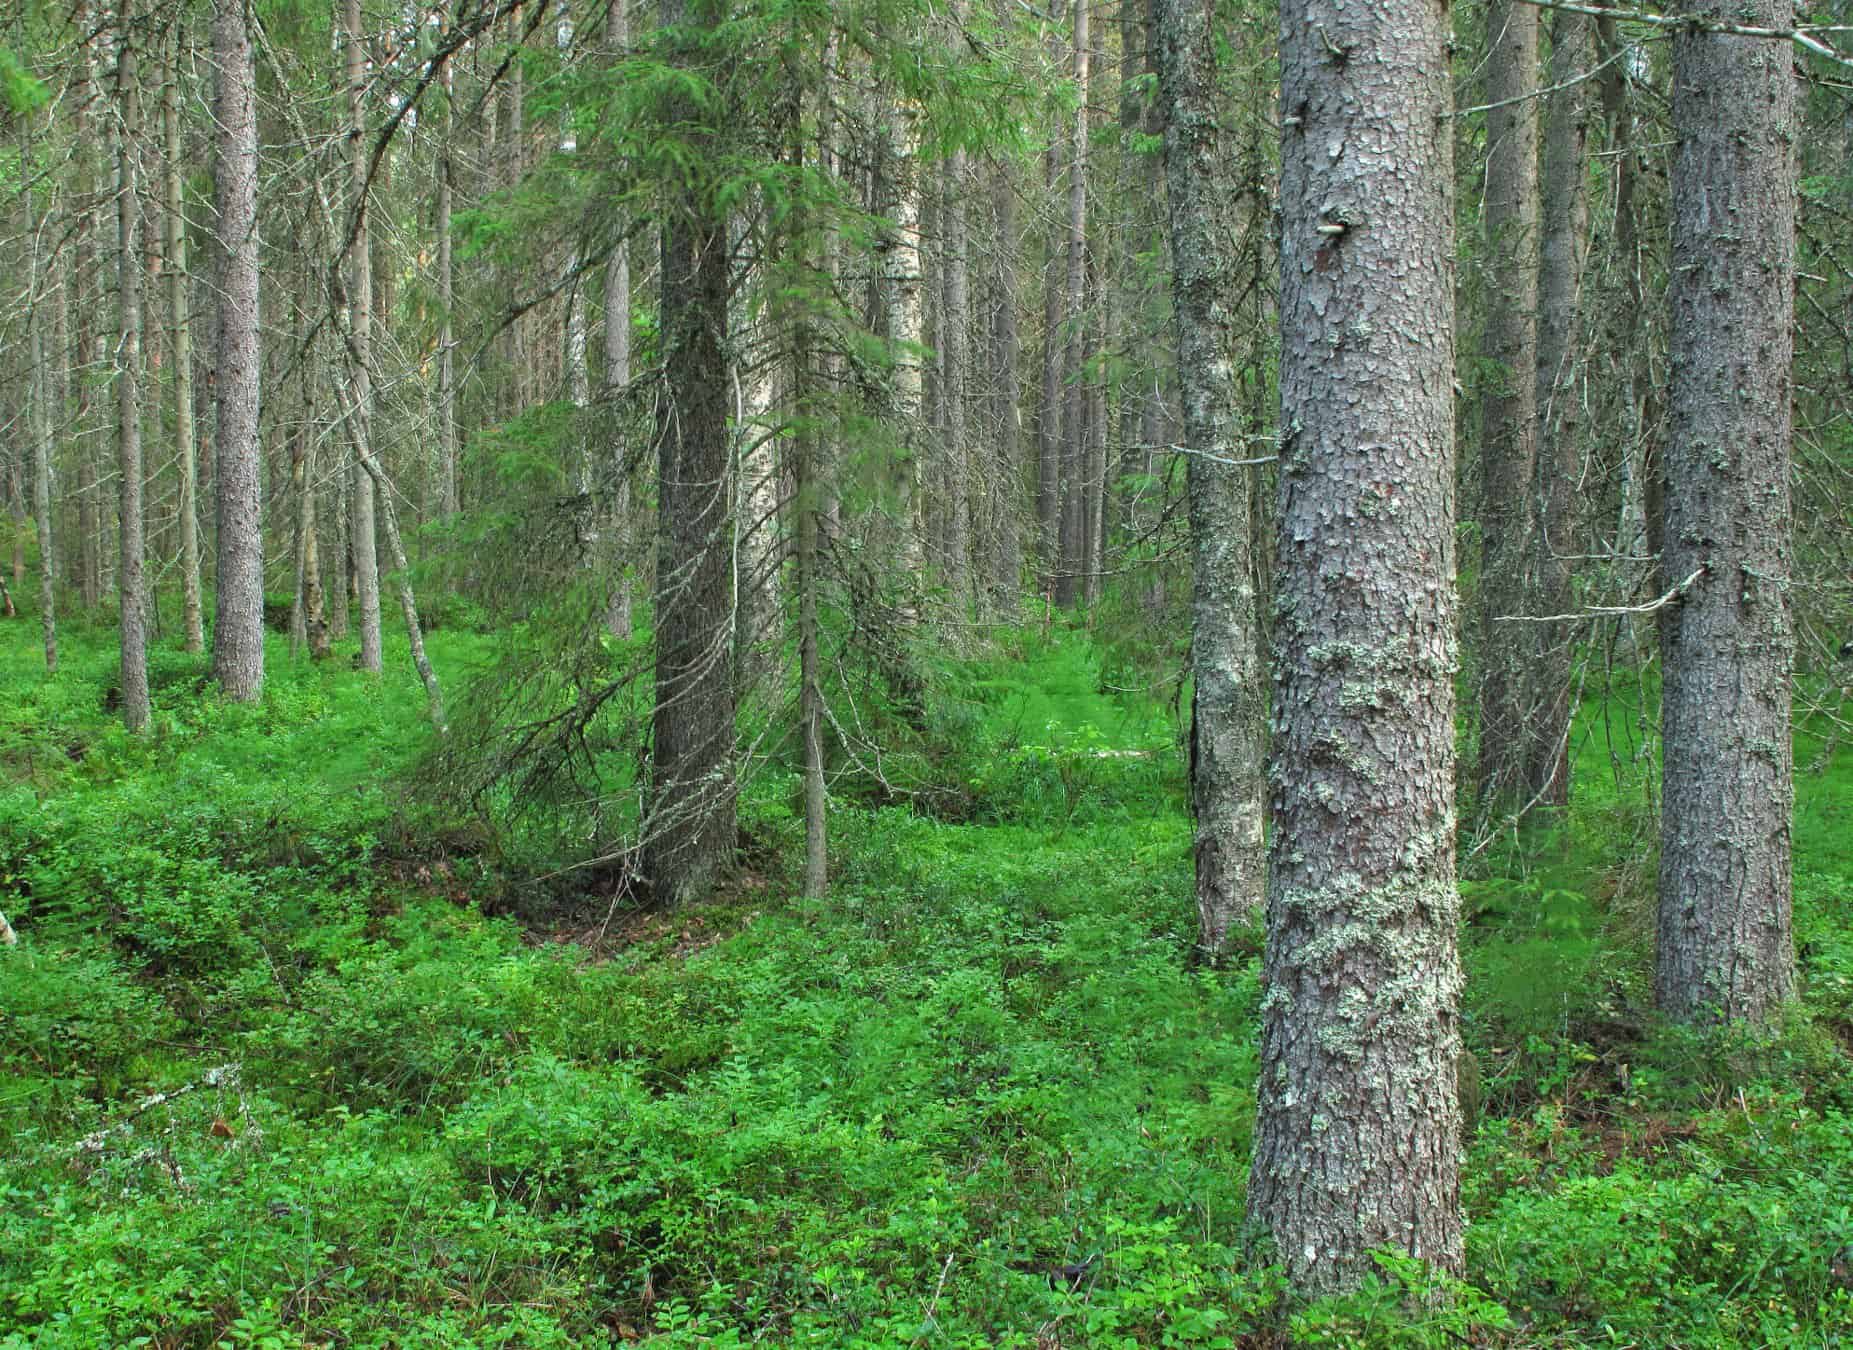 Peatlands in Finland: characteristics and restoration methods